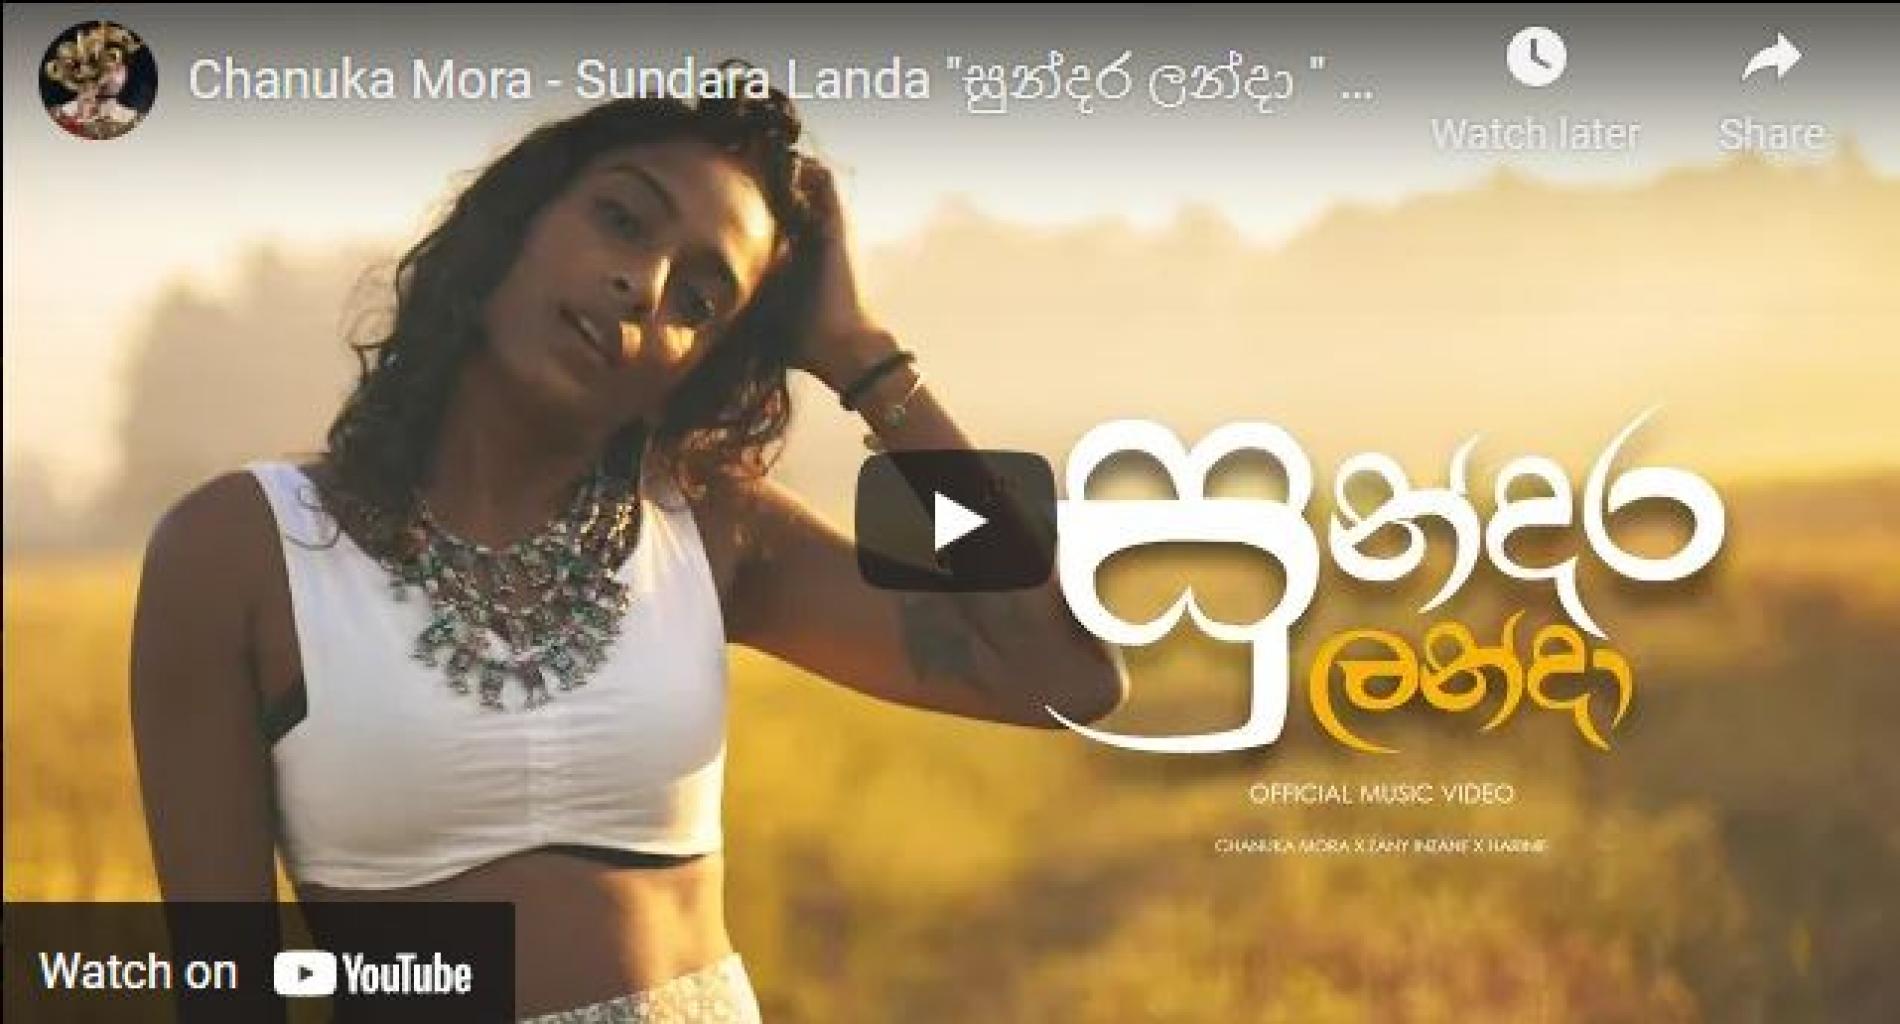 New Music : Chanuka Mora – Sundara Landa “සුන්දර ලන්දා ” Zany Inzane, Harinie (Official Music Video)